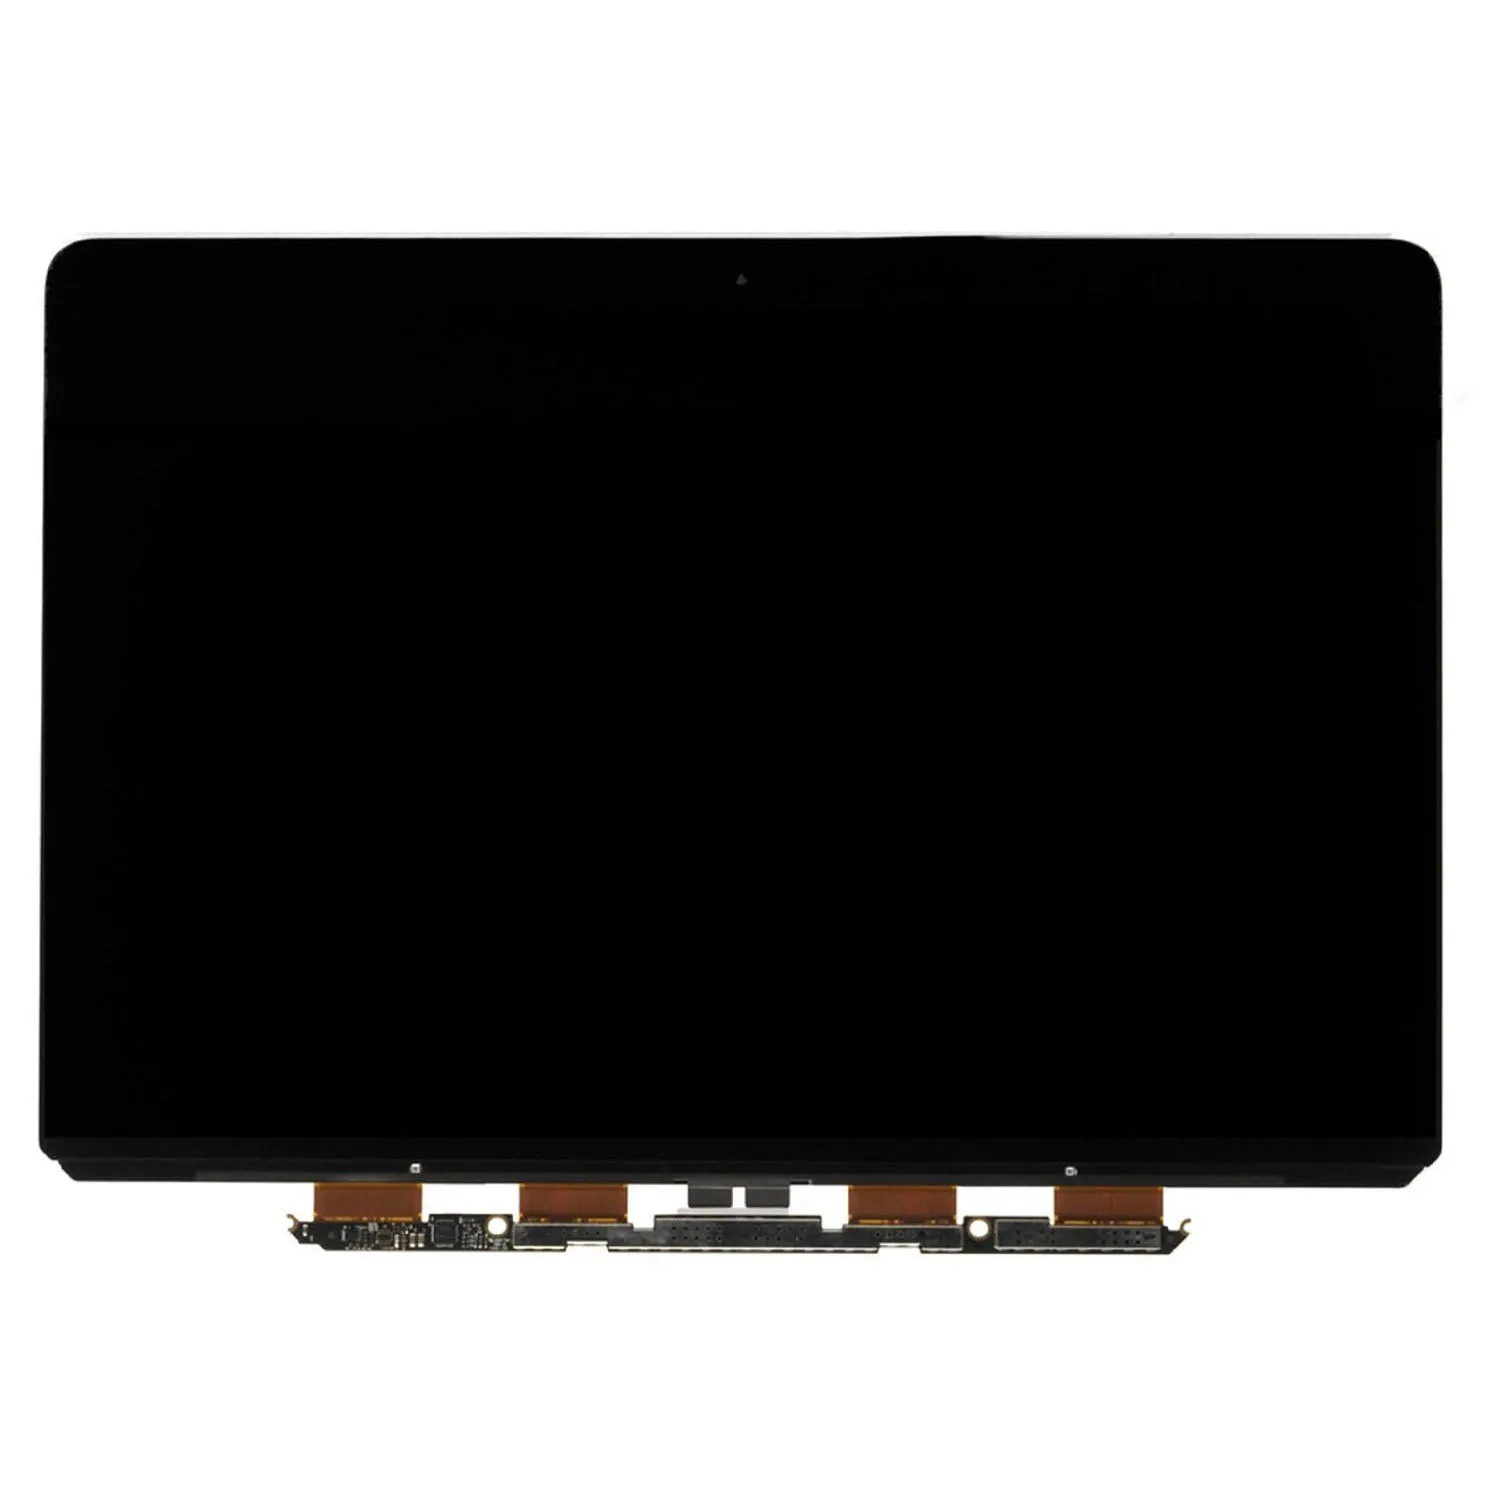 Layar Display LED LCD Laptop Terbaru, dengan Pengganti Retina untuk MacBook Pro A1398 A1502 A1425 2015